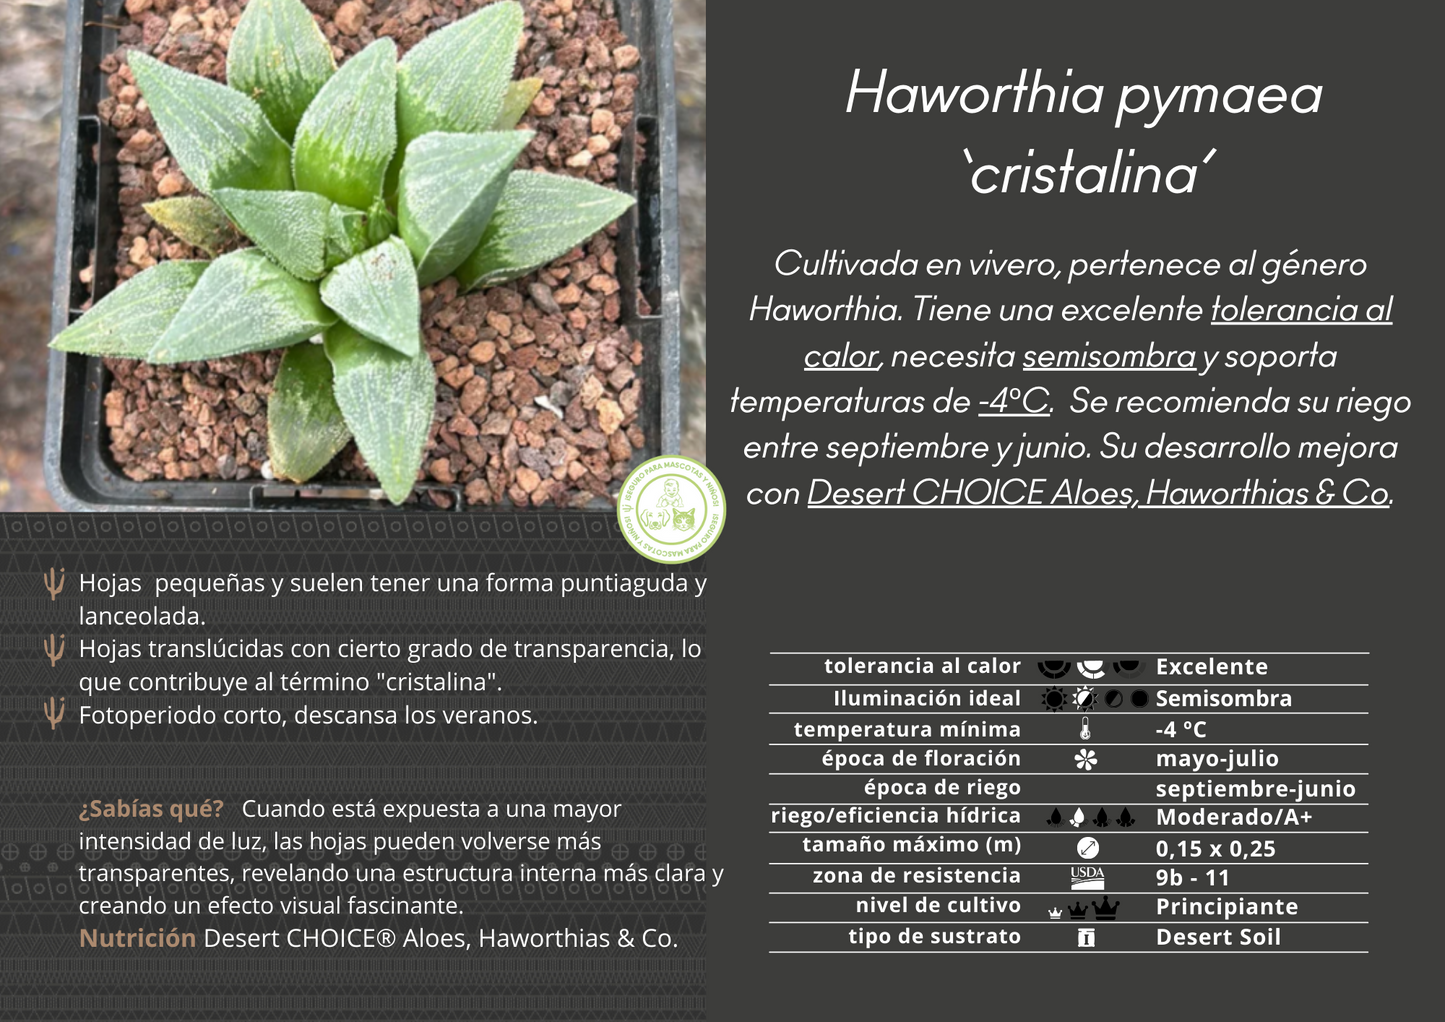 Haworthia pymaea 'Cristalina'